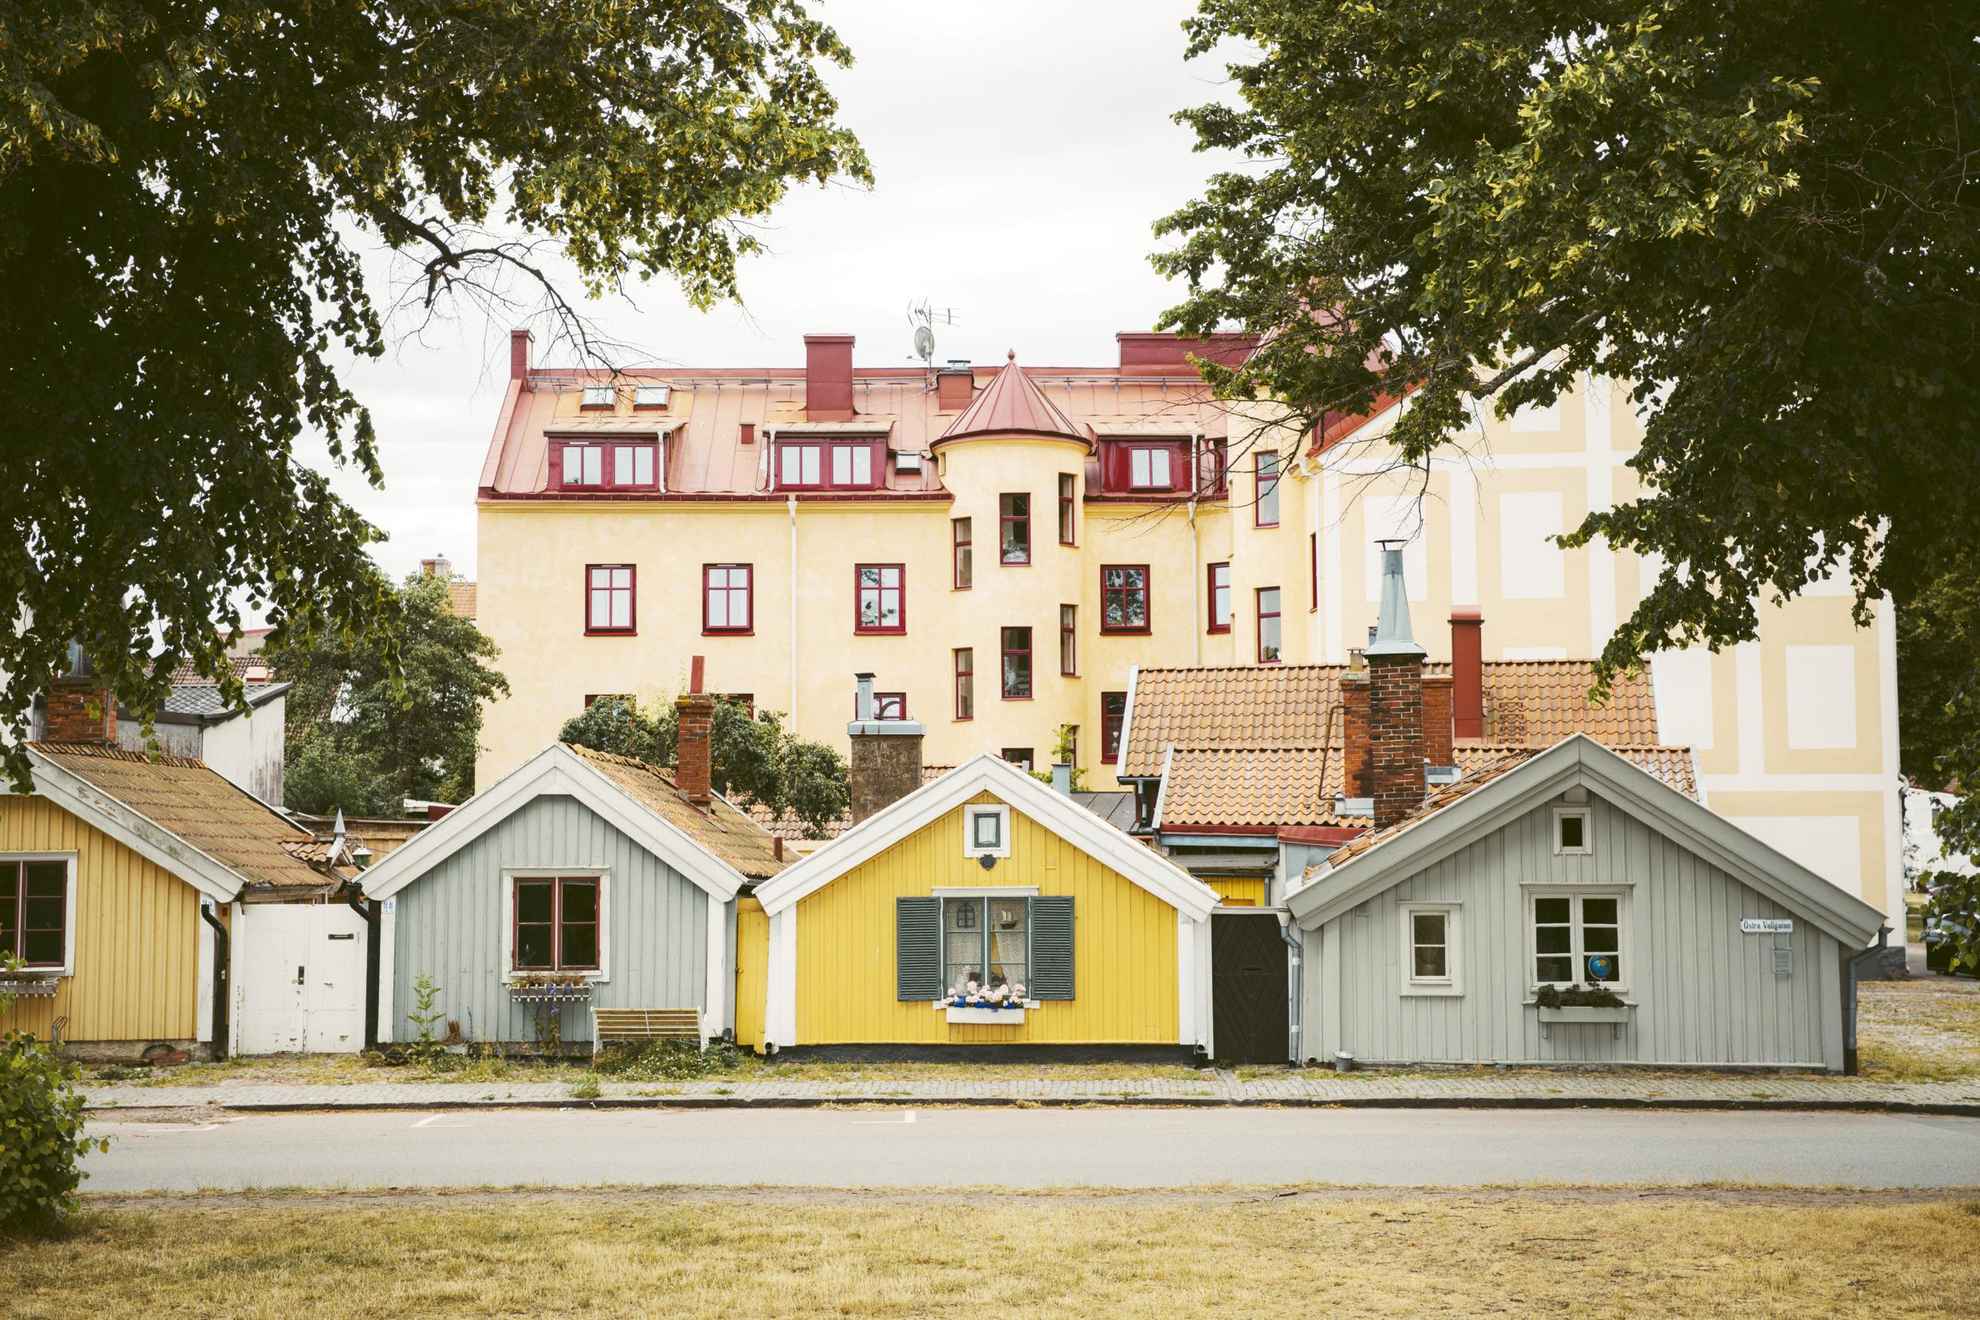 Historical city of Kalmar